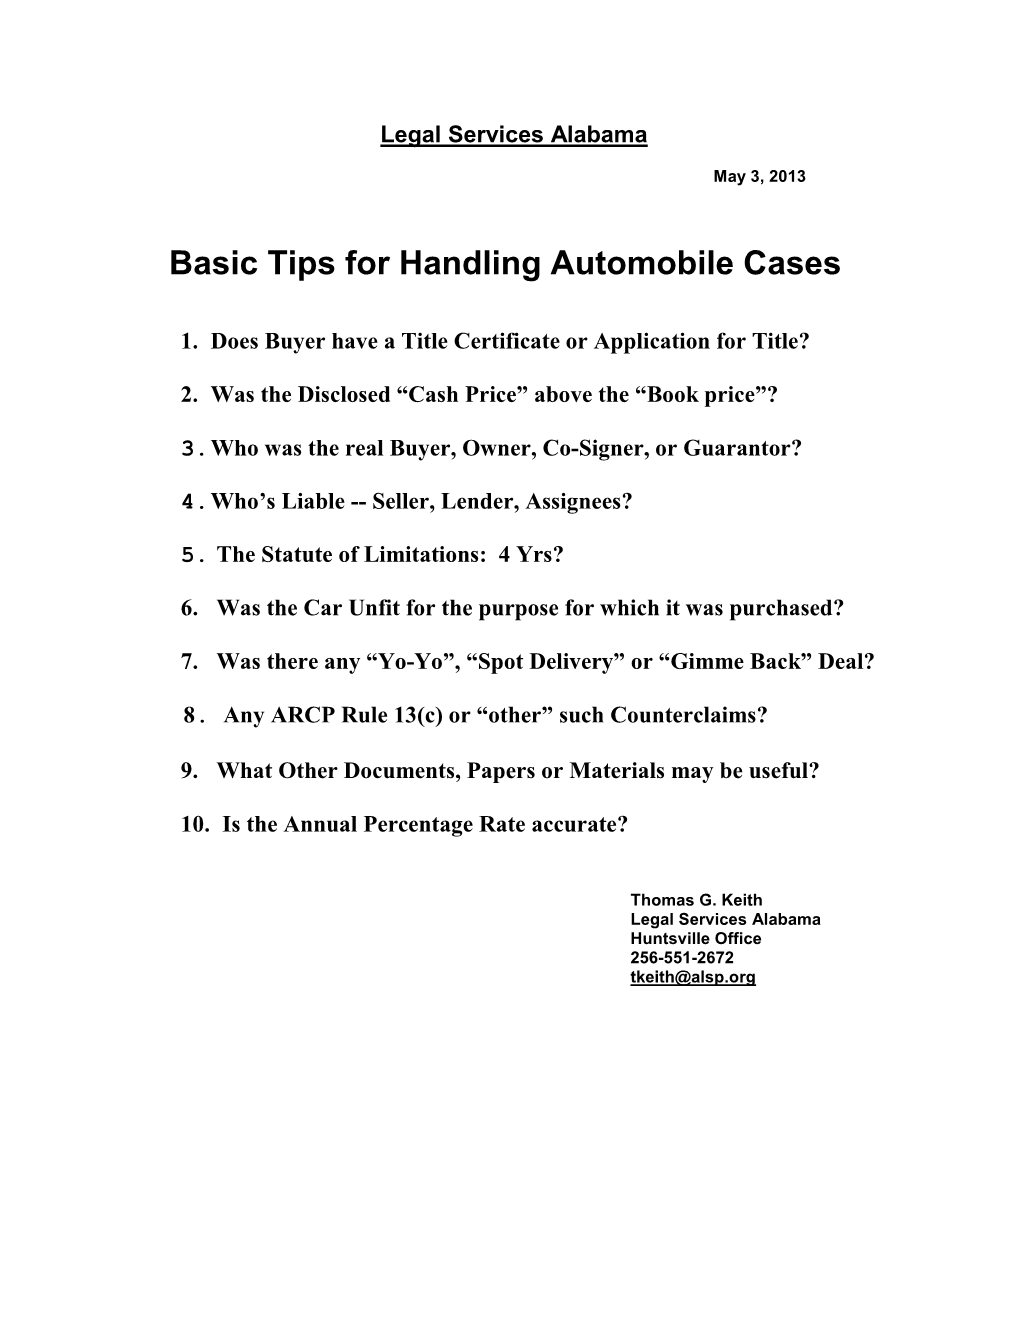 Basic Tips for Handling Automobile Cases